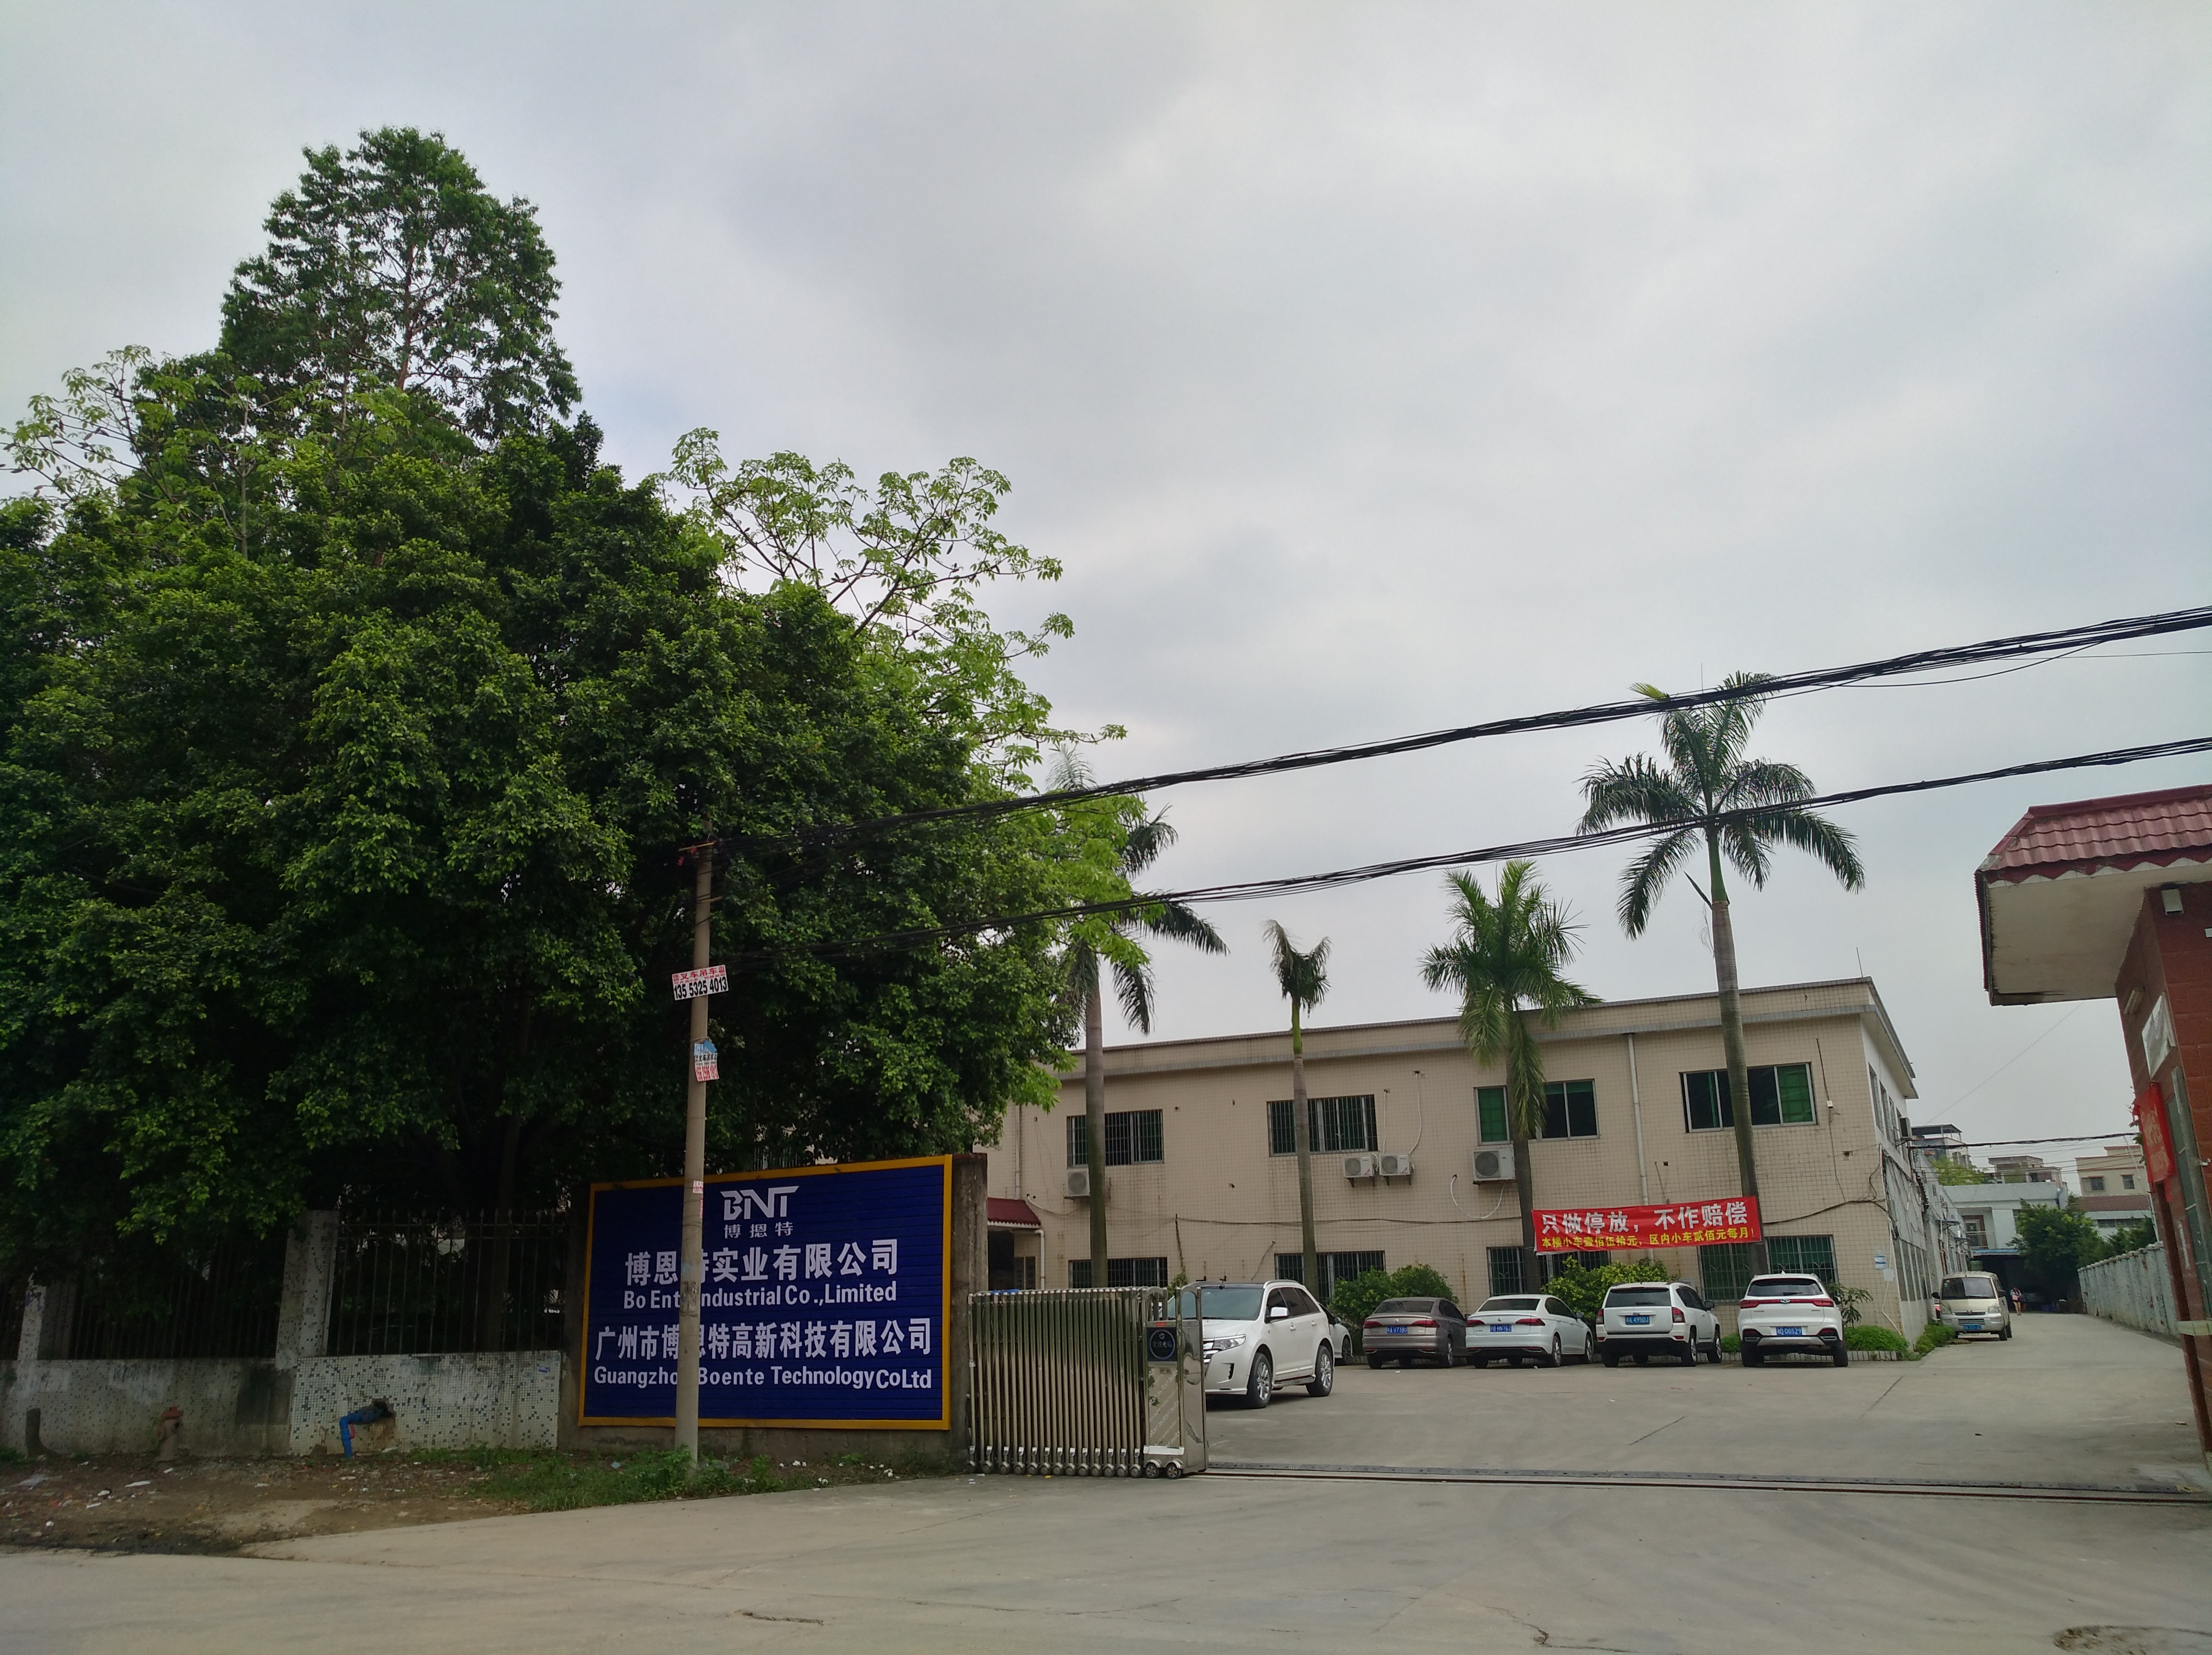 Guangzhou Boente Technology Co Ltd